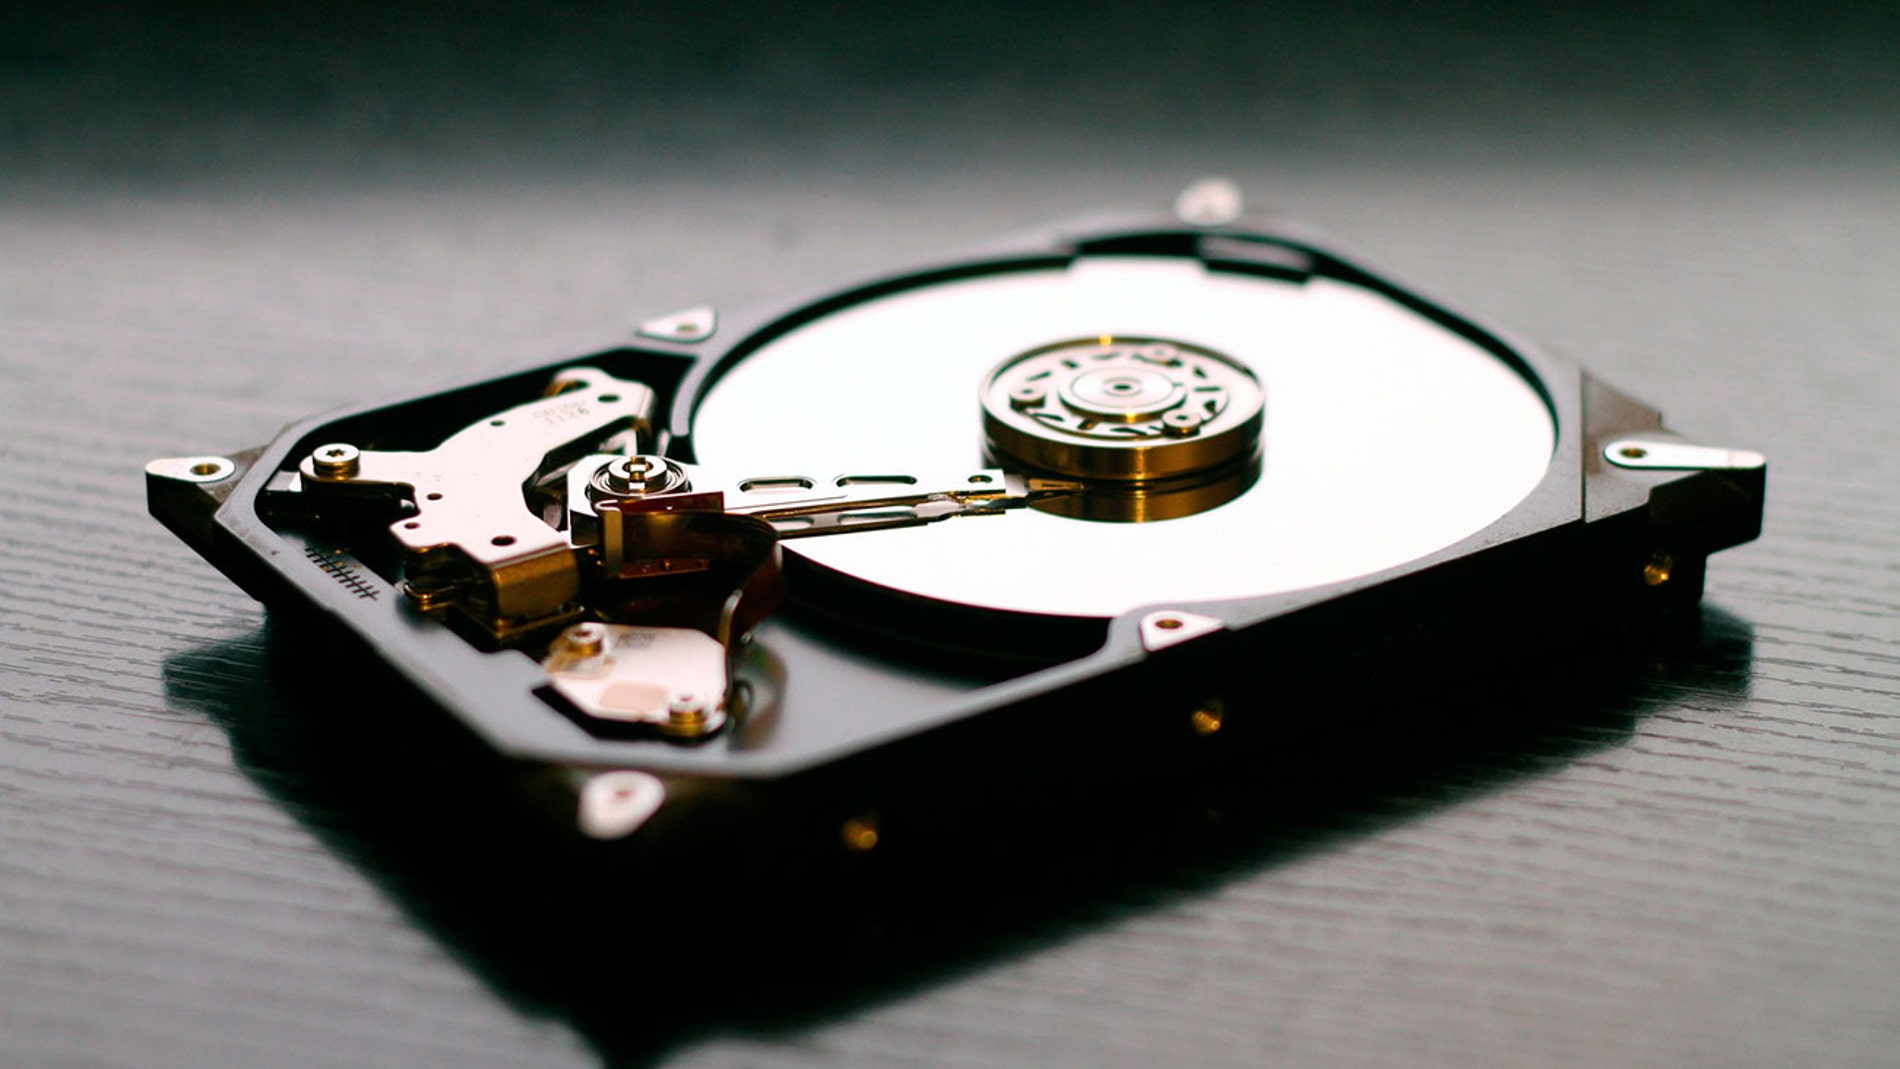 Reutiliza tus antiguos discos duros para como discos externos